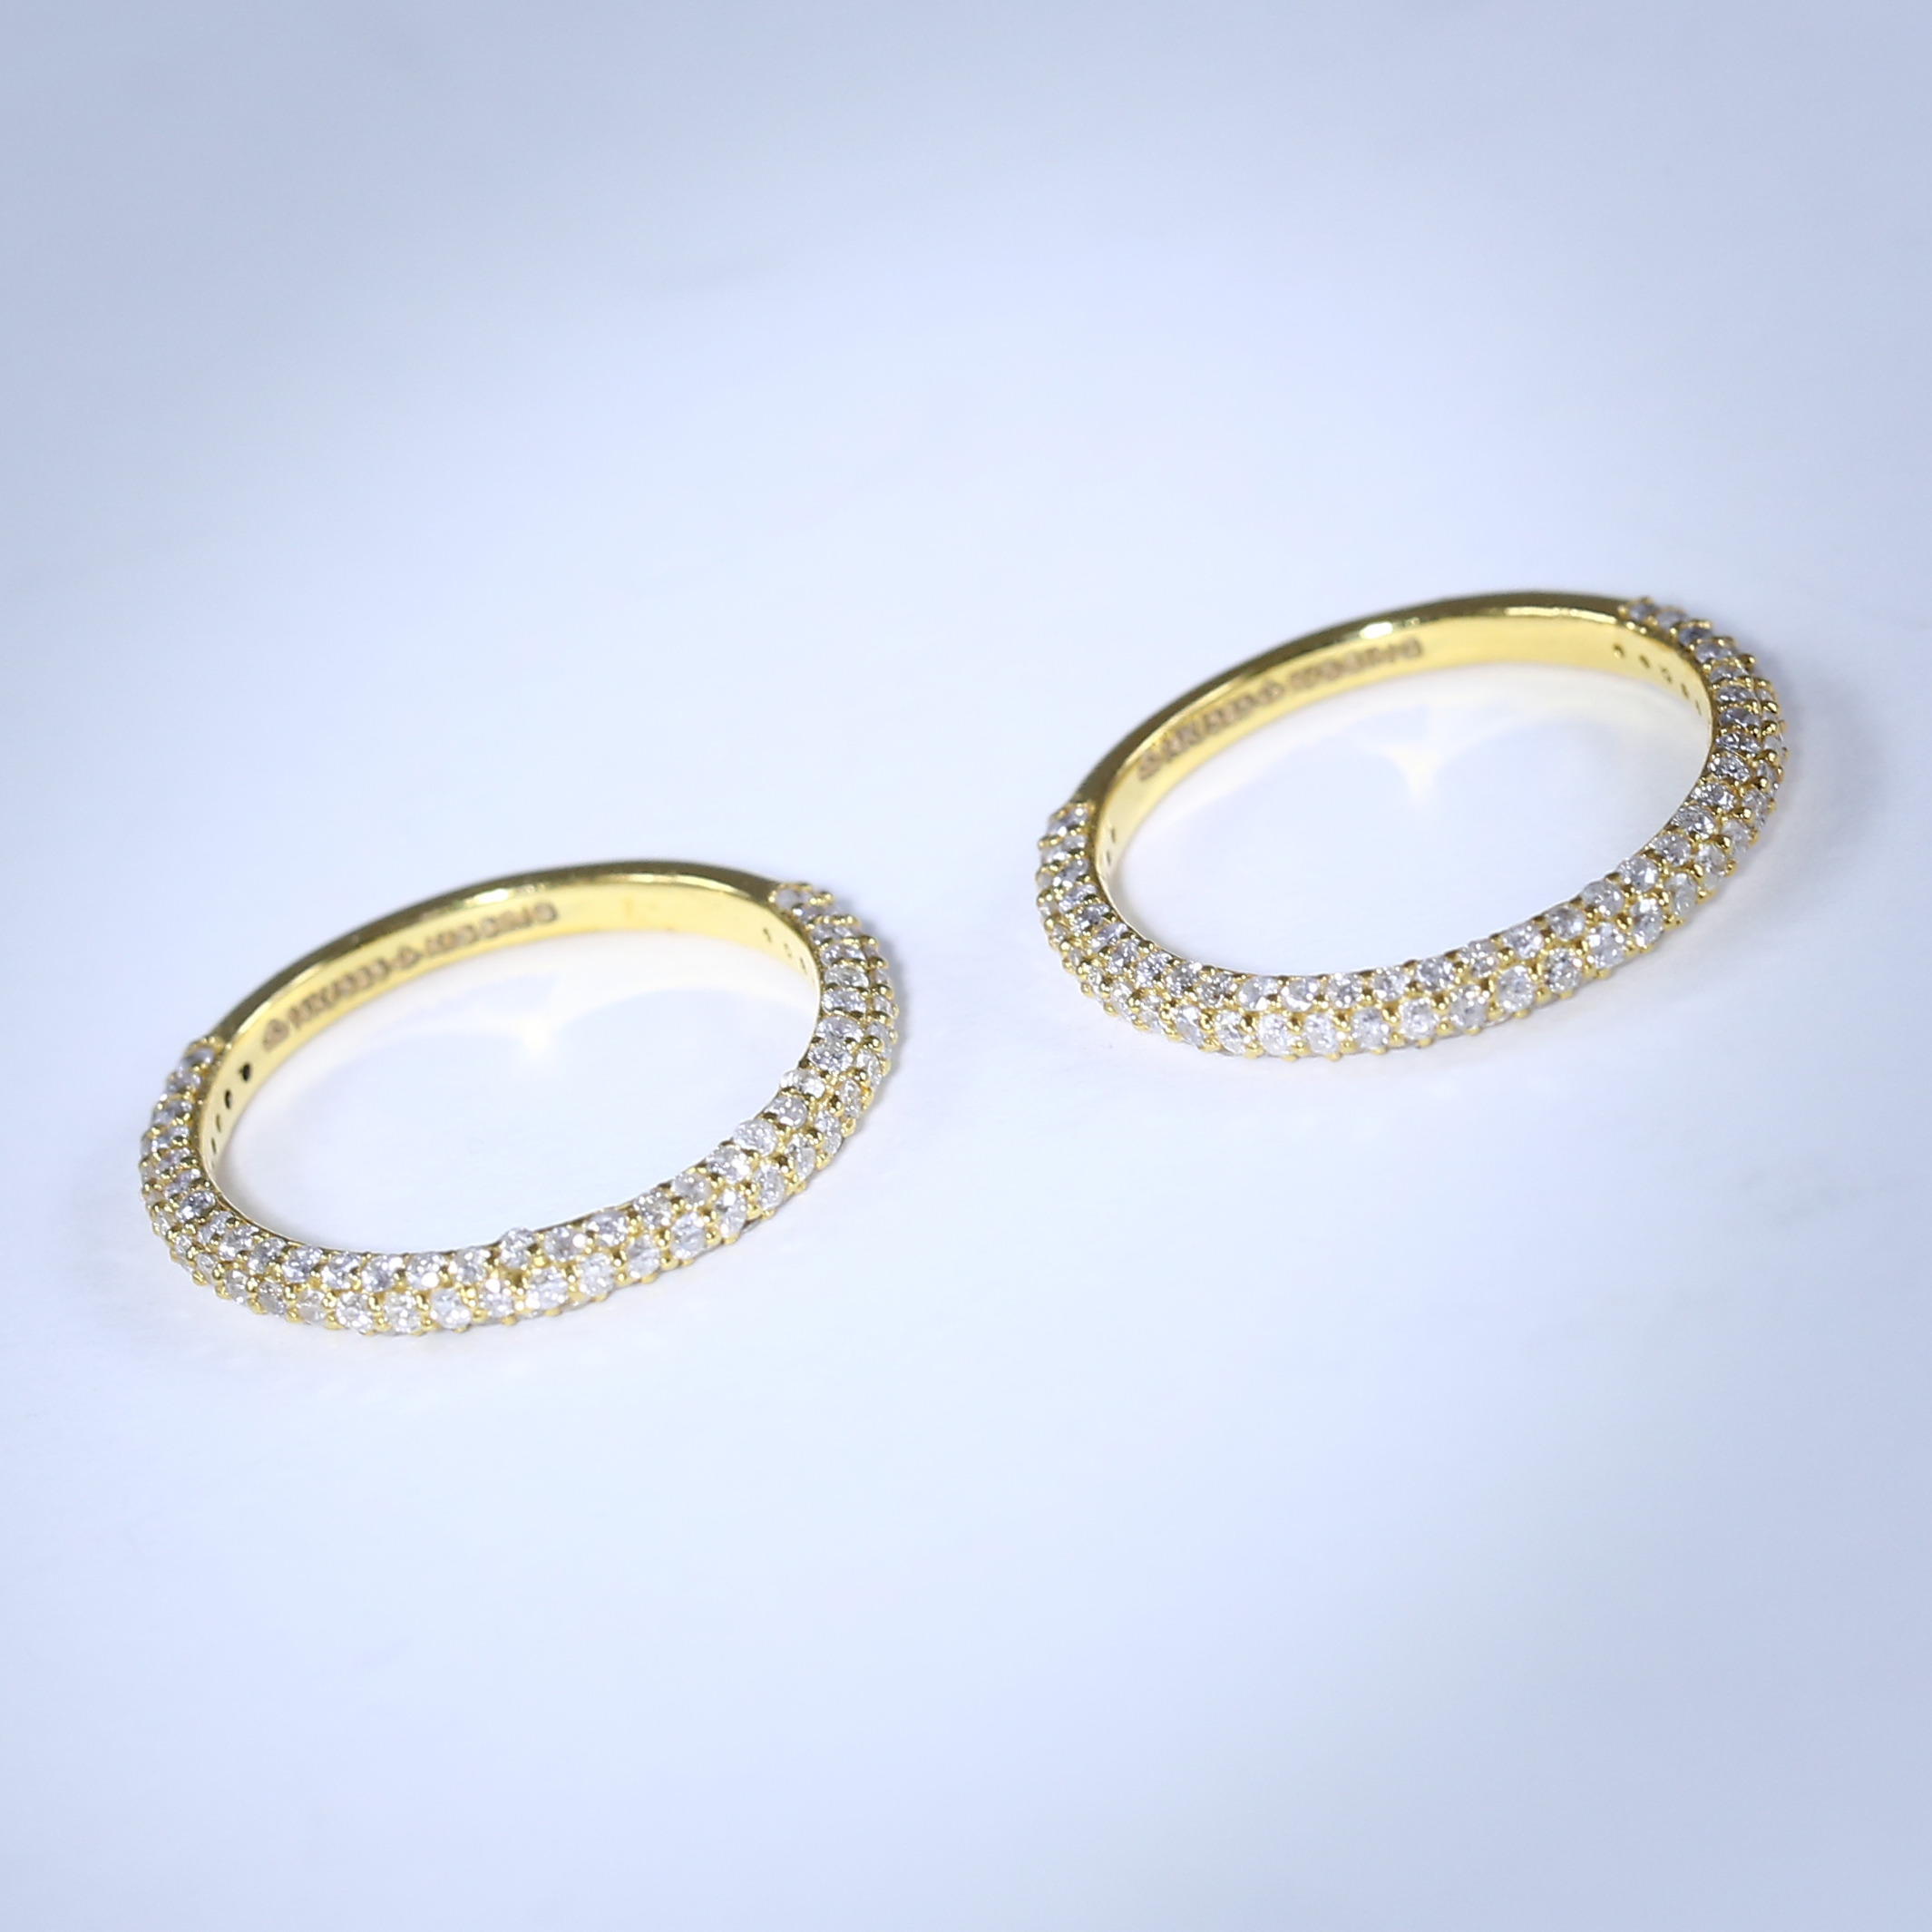 14 K / 585 Set of 2 Yellow Gold Engaement / Wedding Diamond Band Rings - Image 9 of 9